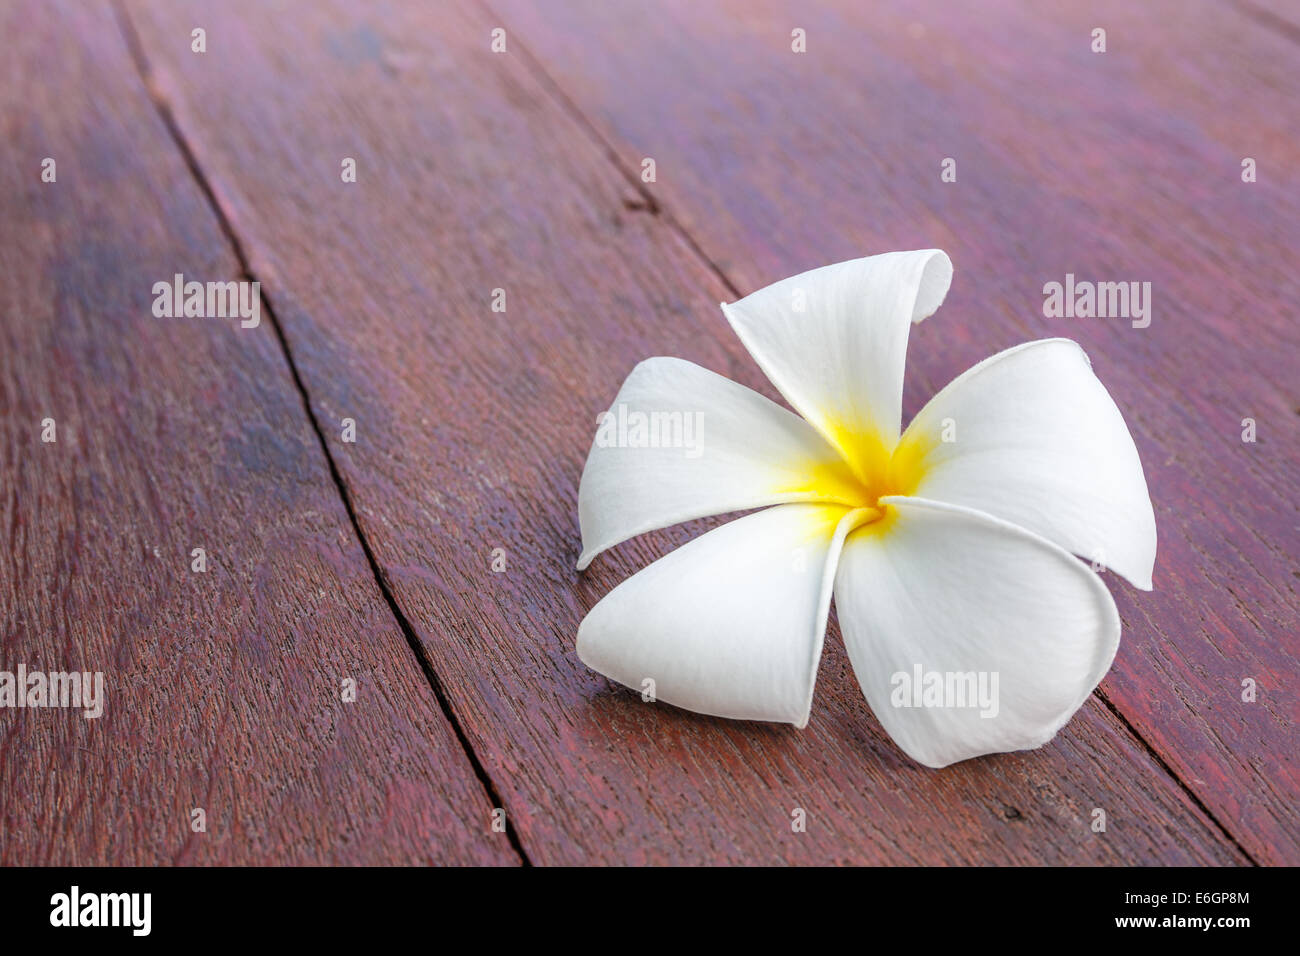 This flower, frangipani or plumeria was found on wooden floor. Stock Photo